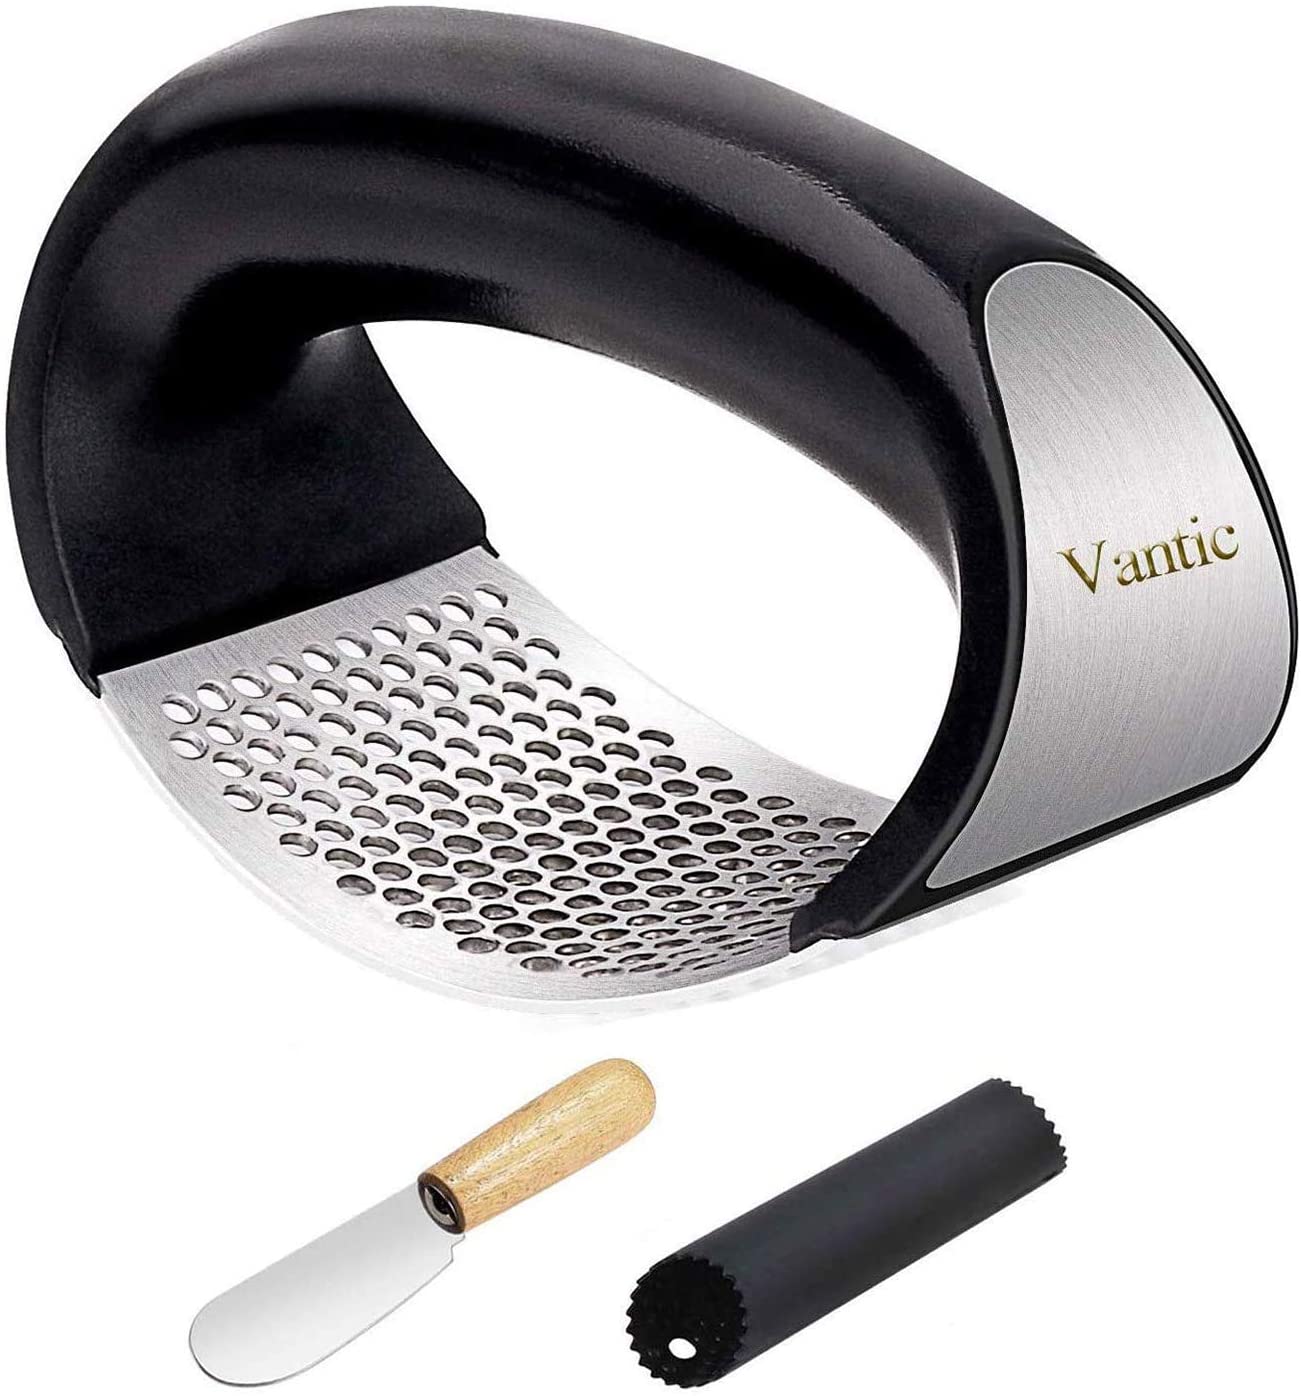 Vantic Garlic Press Rocker - Stainless Steel Garlic Mincer Crusher and Peeler $7.49 AC + FSSS